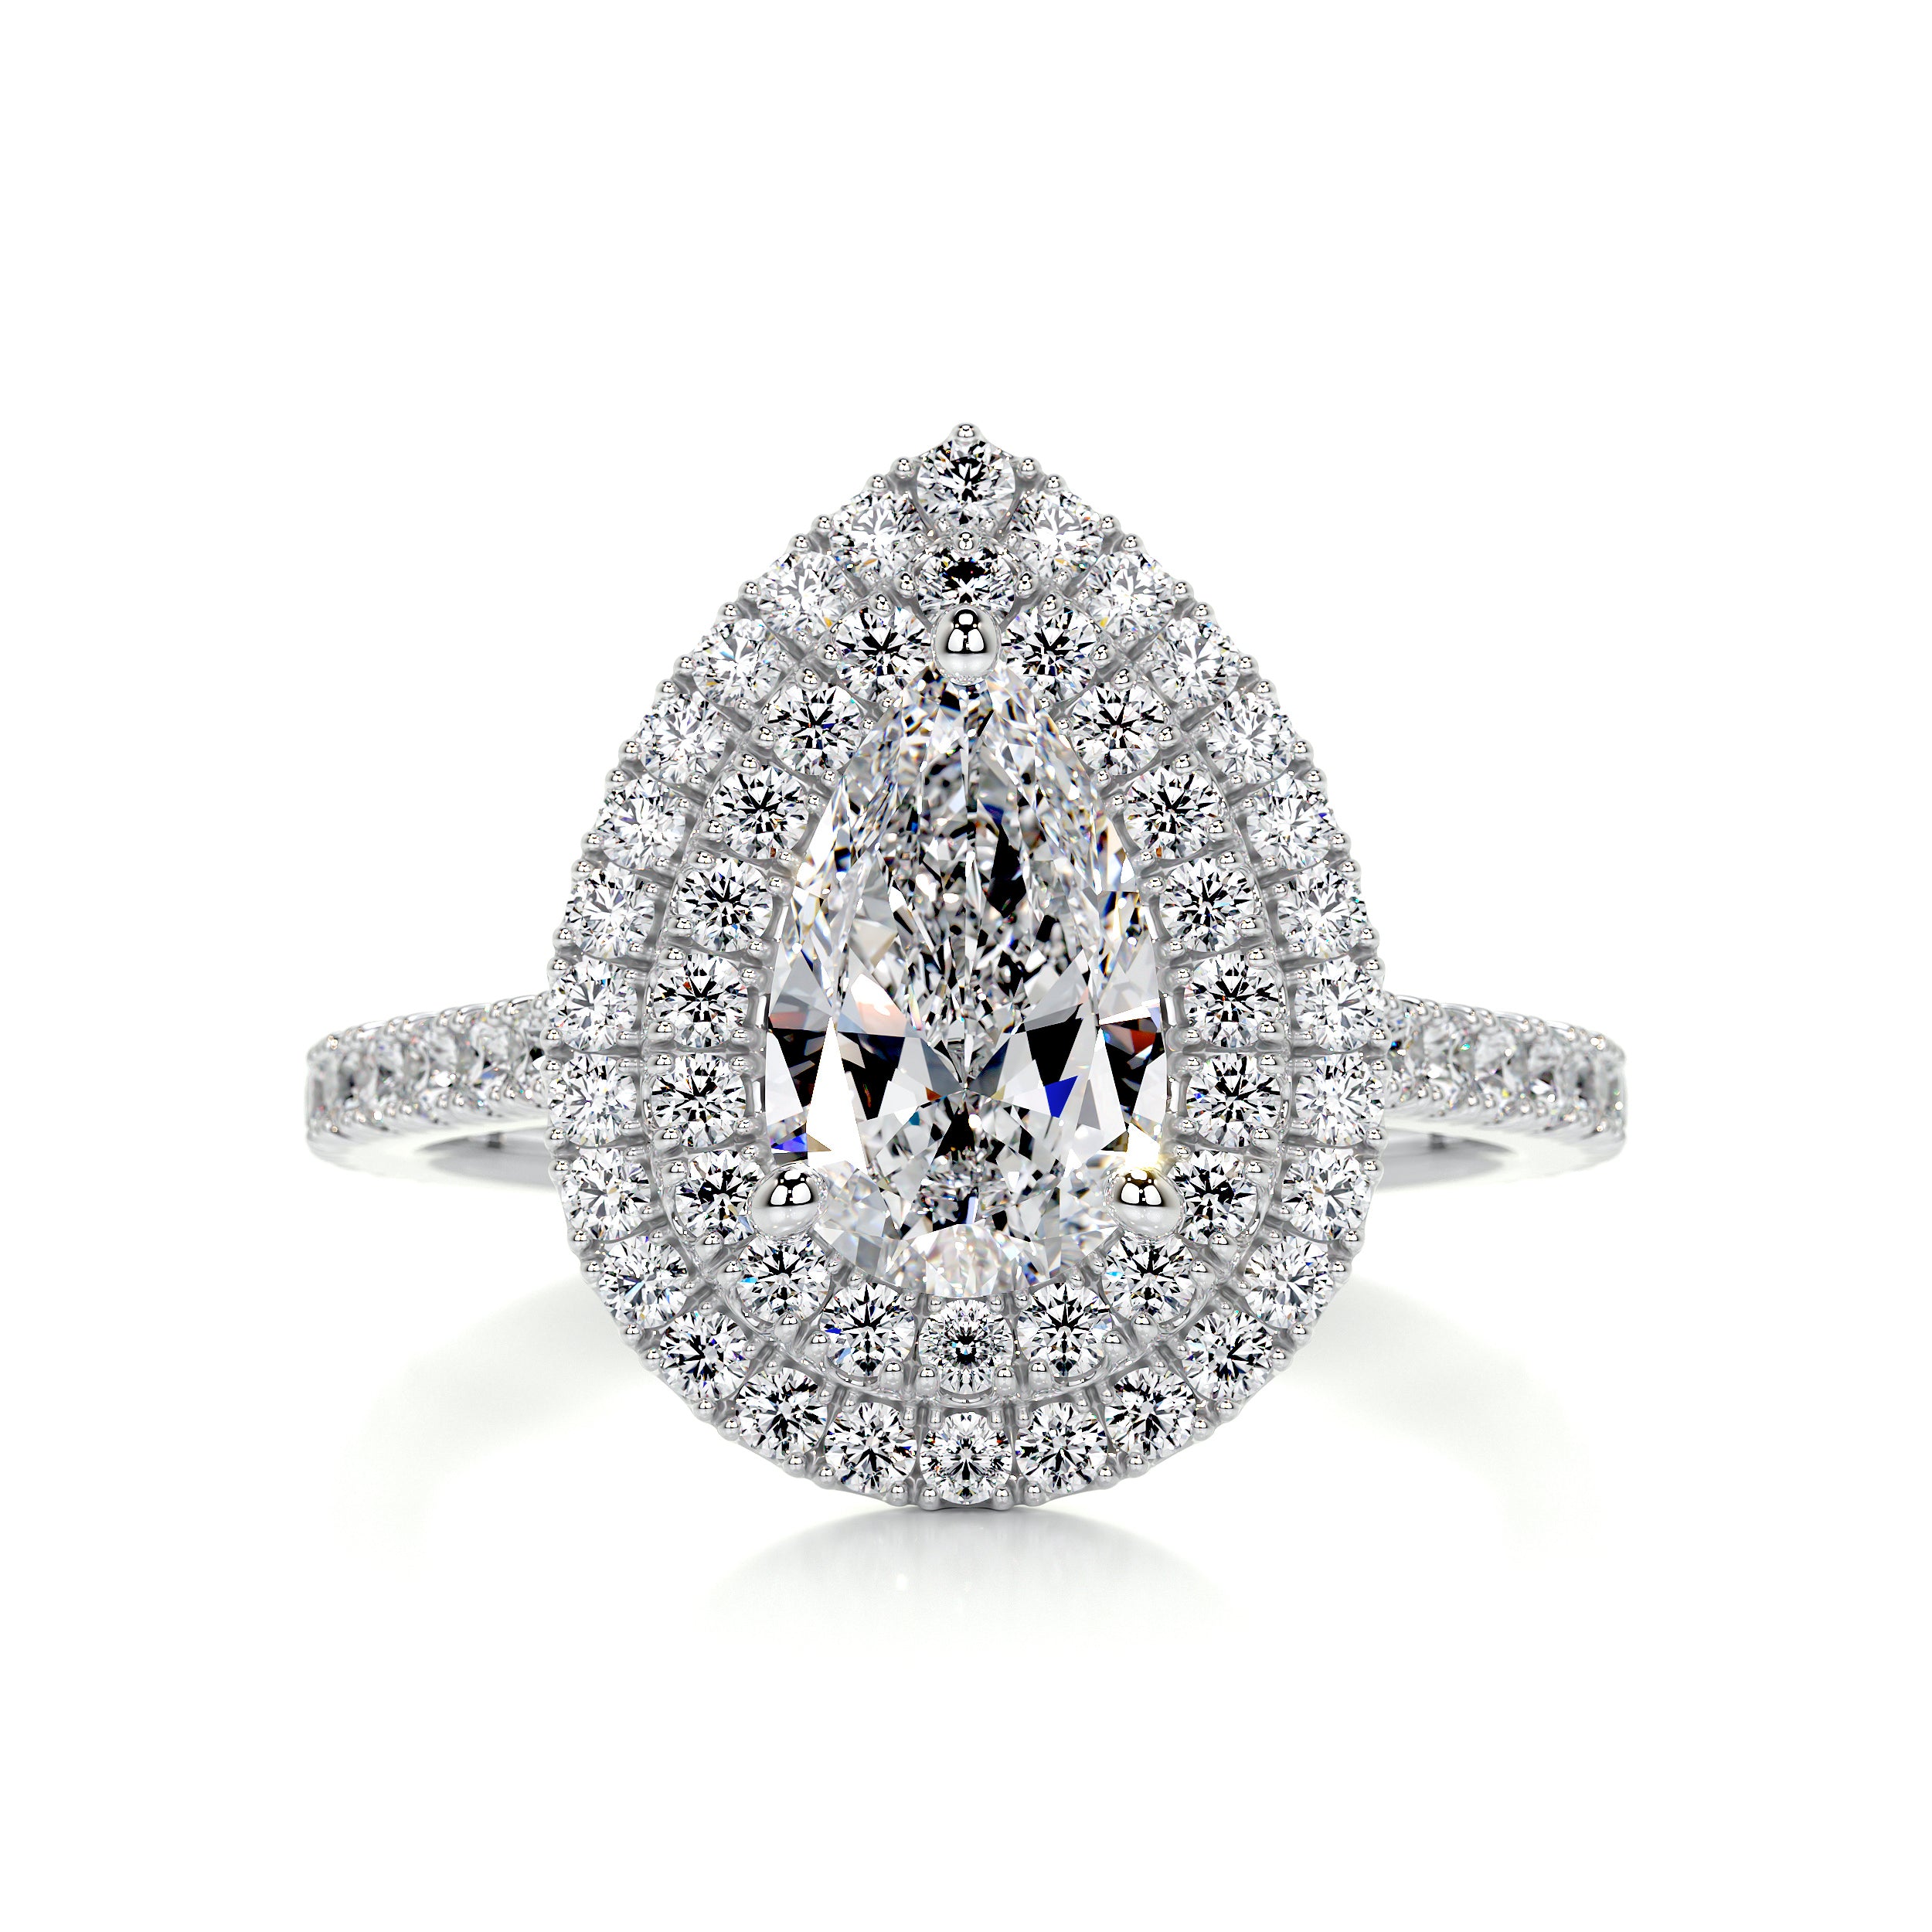 Gloria Diamond Engagement Ring   (1.65 Carat) -18K White Gold